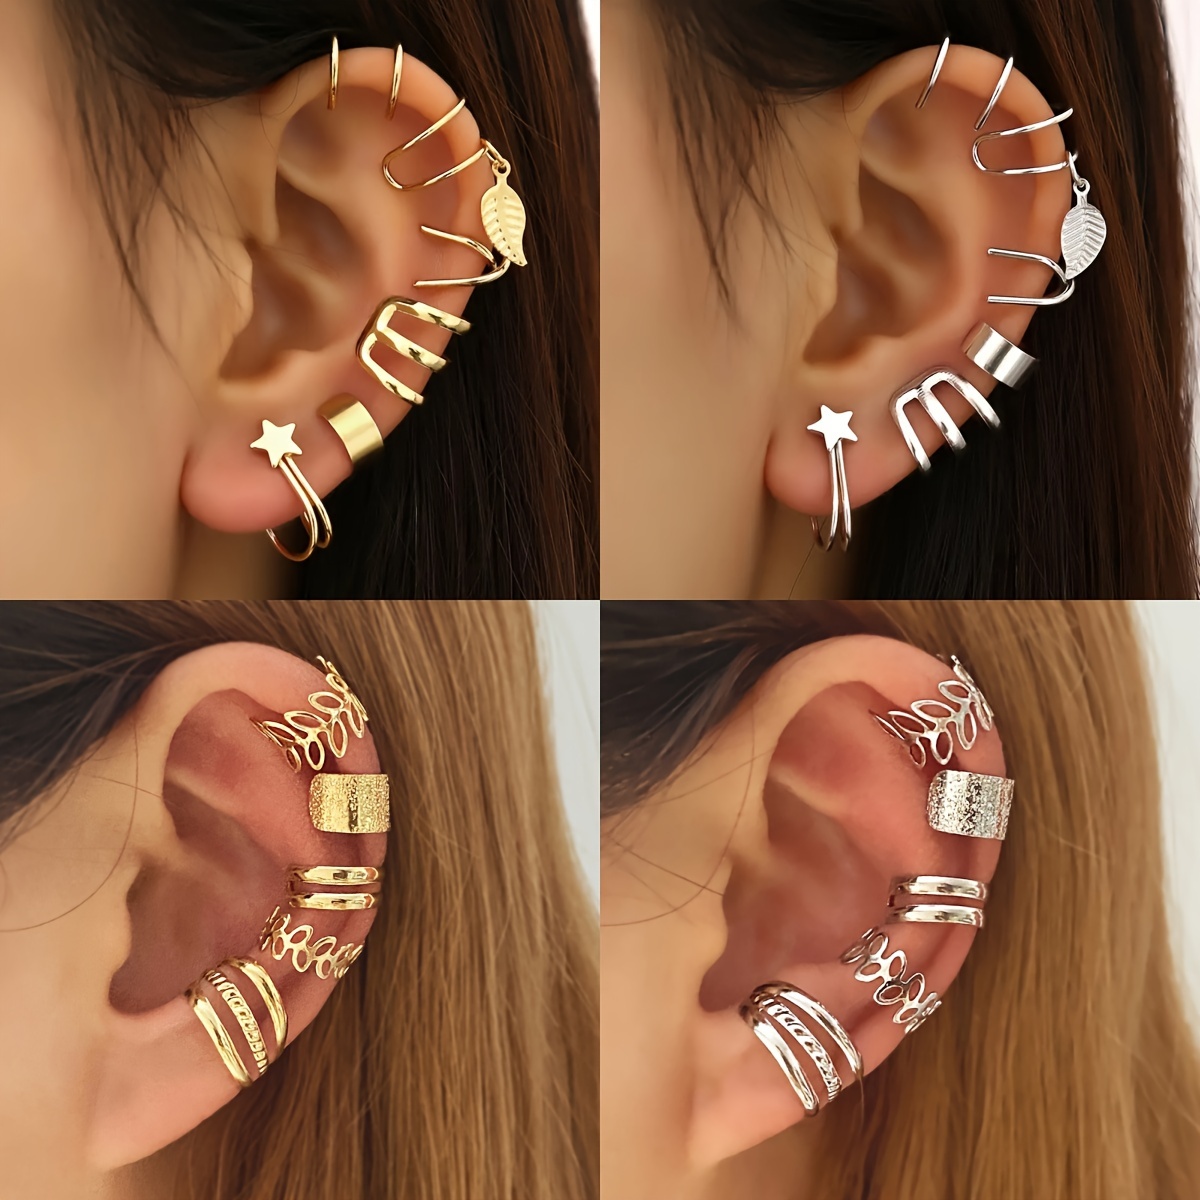 

22pcs Fashion Accessories Adjustable Ear Cuffs Earrings For Girls Women Non-piercing Cartilage Clip On Wrap Earring Set